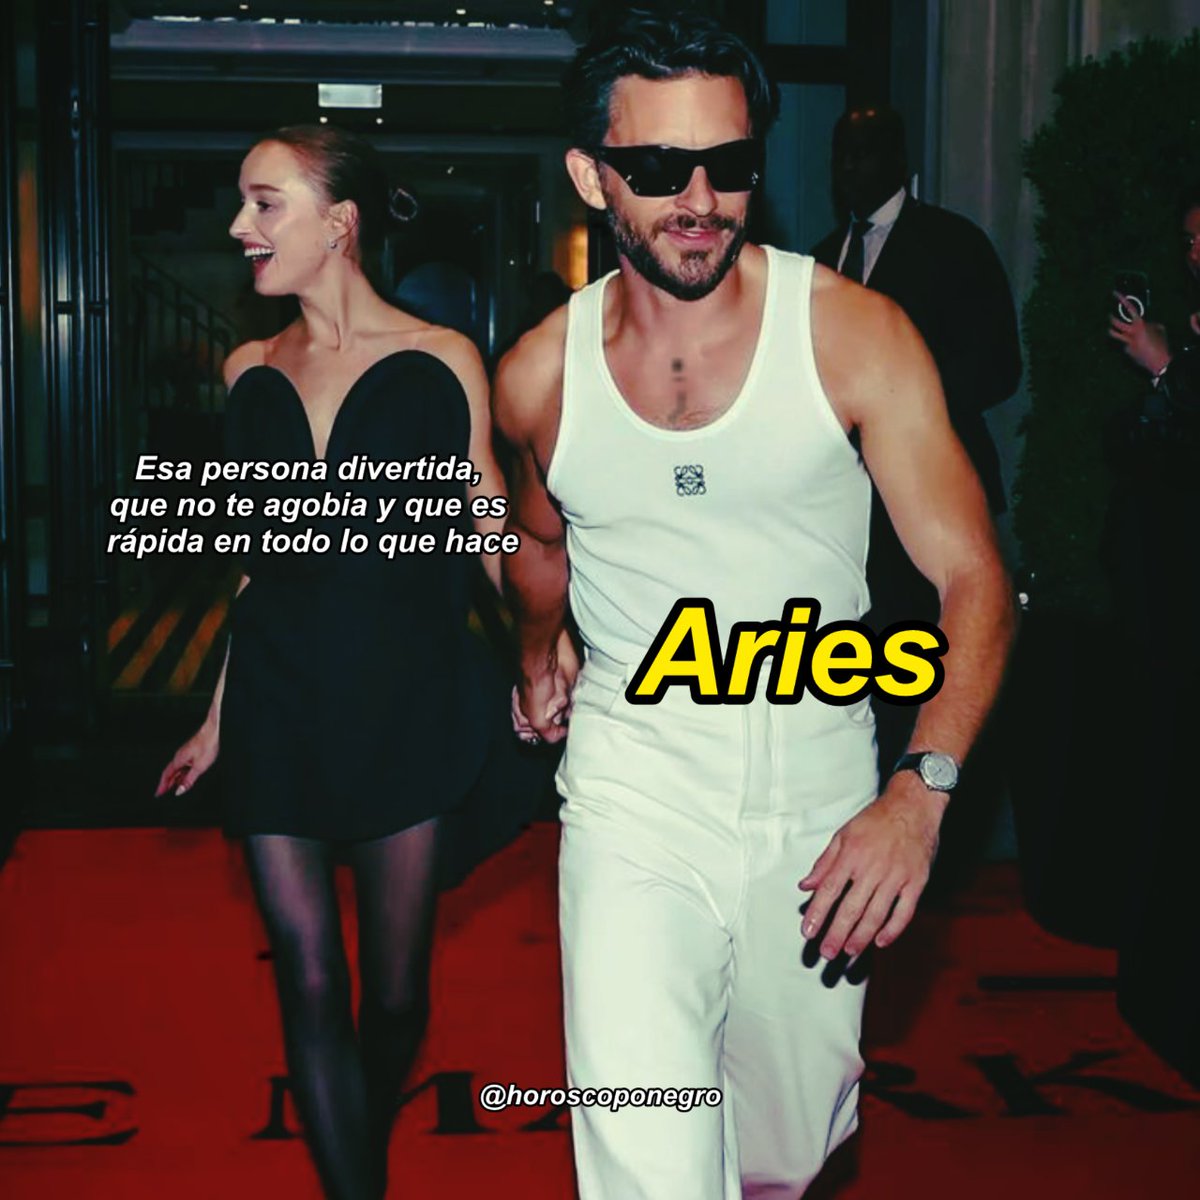 Aries, etiqueta a esa persona ✨🖤✨